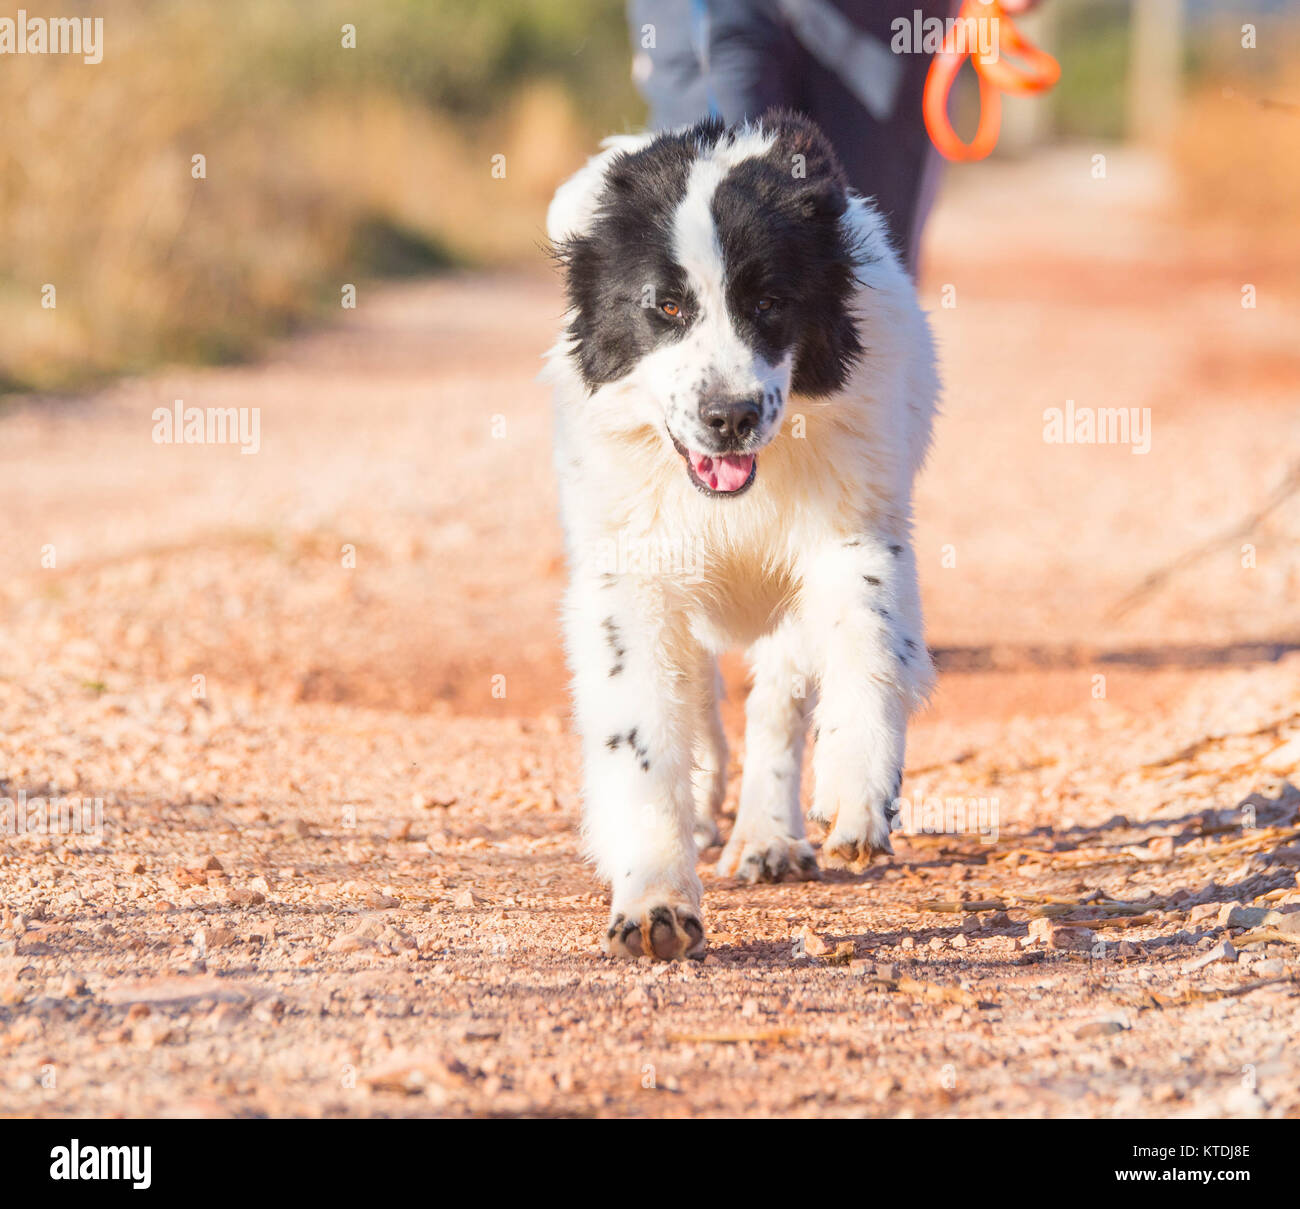 Landseer cane di razza pura Foto Stock